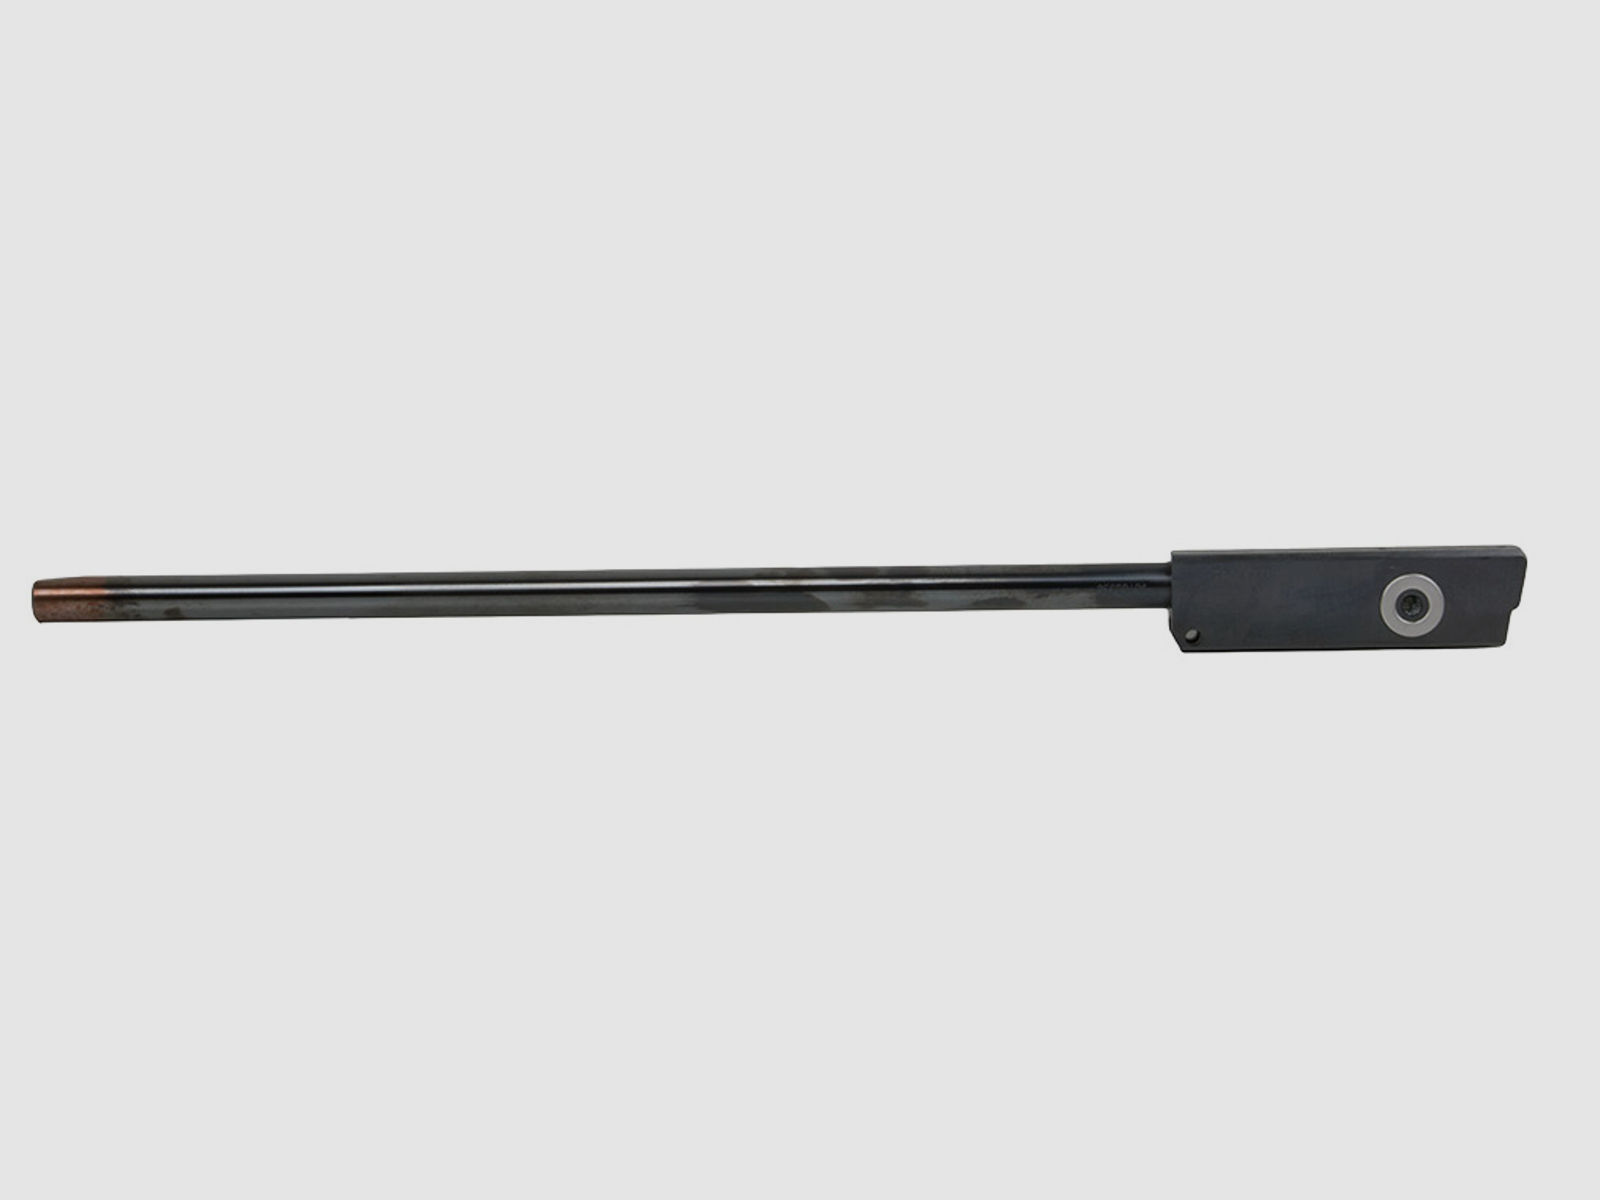 Wechsellauf fĂĽr Luftgewehr Diana 350 Magnum Kunststoffkorn LĂ¤nge 495 mm Kaliber 4,5 mm (P18)